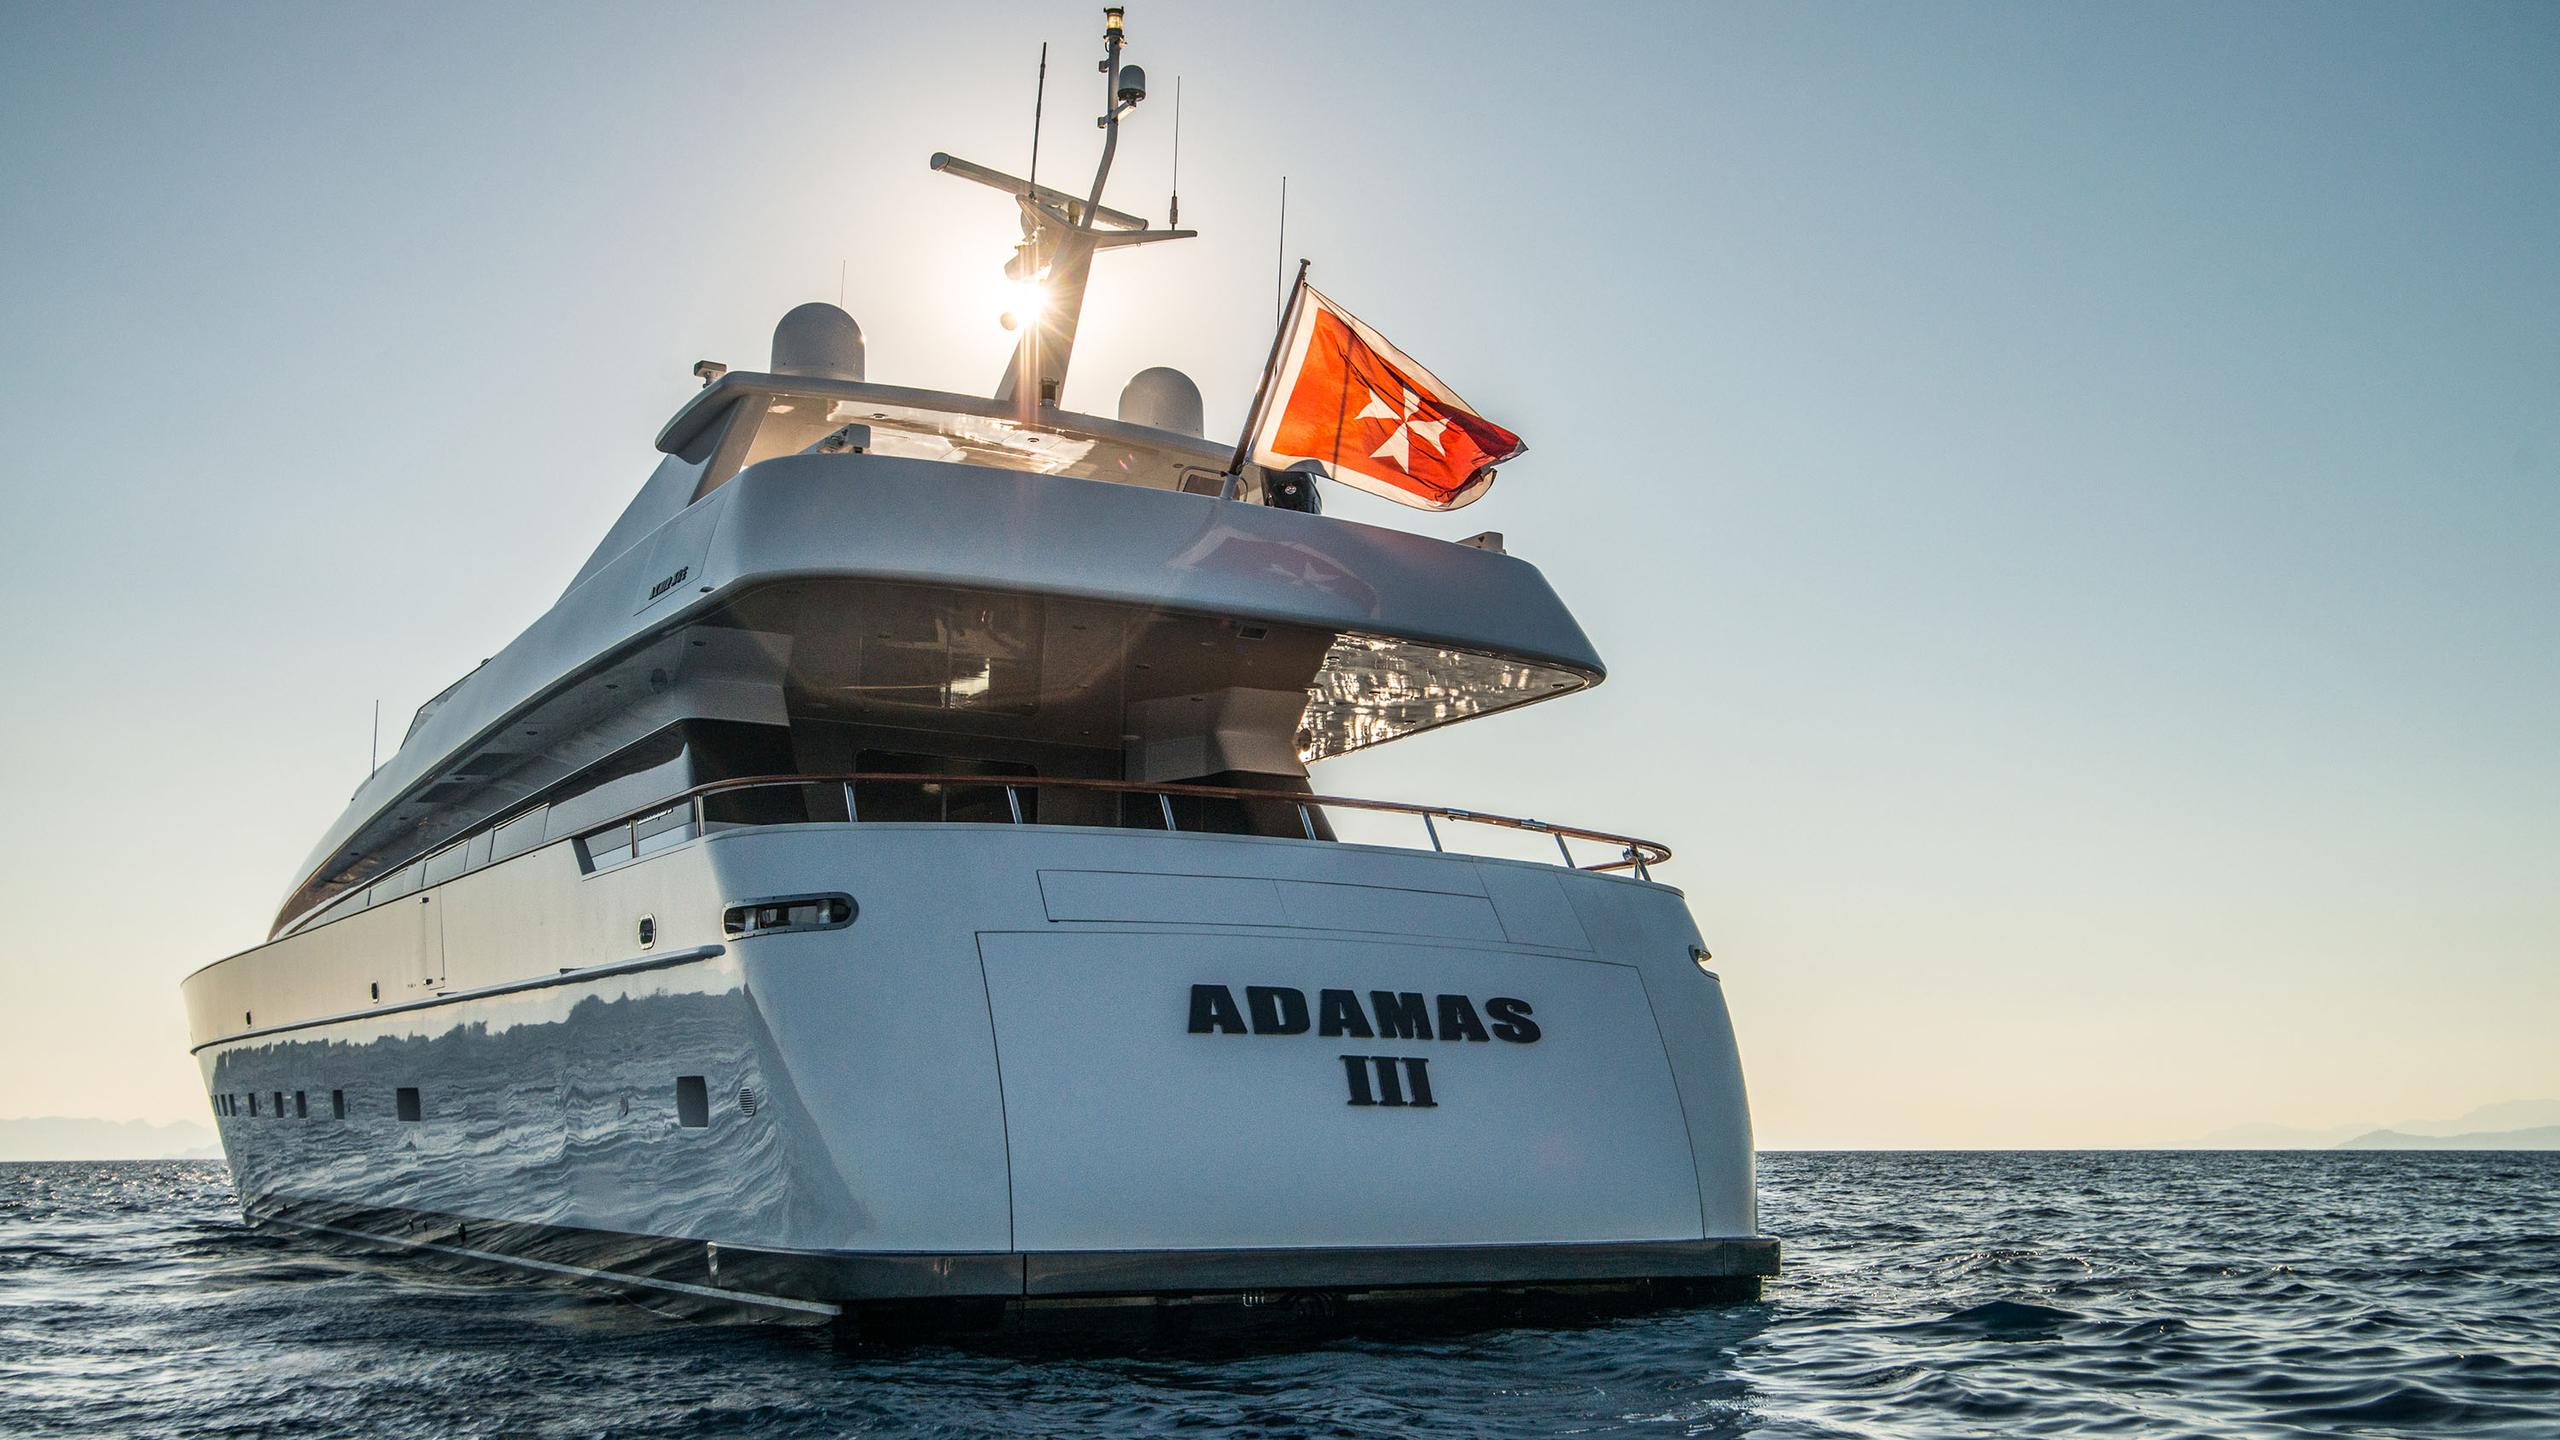 ADAMAS III Yacht • Allesandro Falciai $5M Superyacht • Cantieri di Pisa • 1996